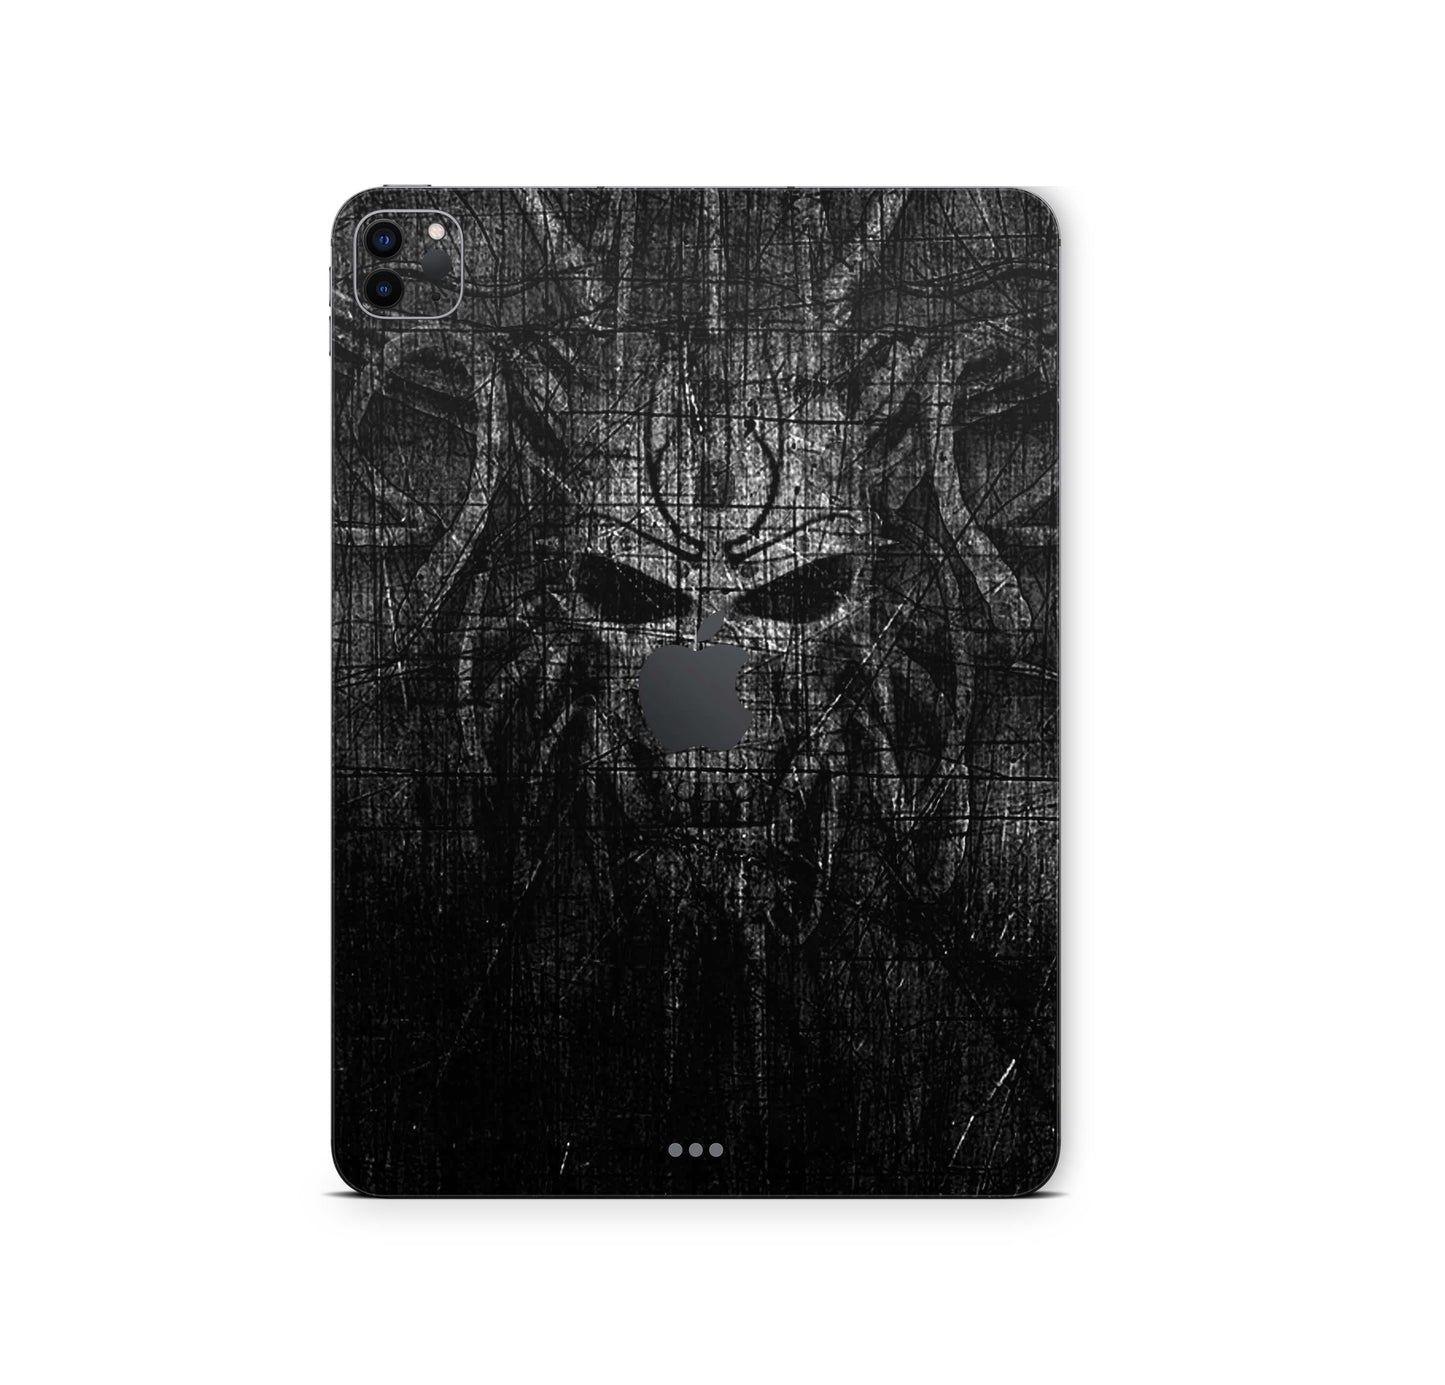 iPad Pro Skin 11" 3.Generation M1 2021 Design Cover Folie Vinyl Skins & Wraps Aufkleber Skins4u Black-Demon  